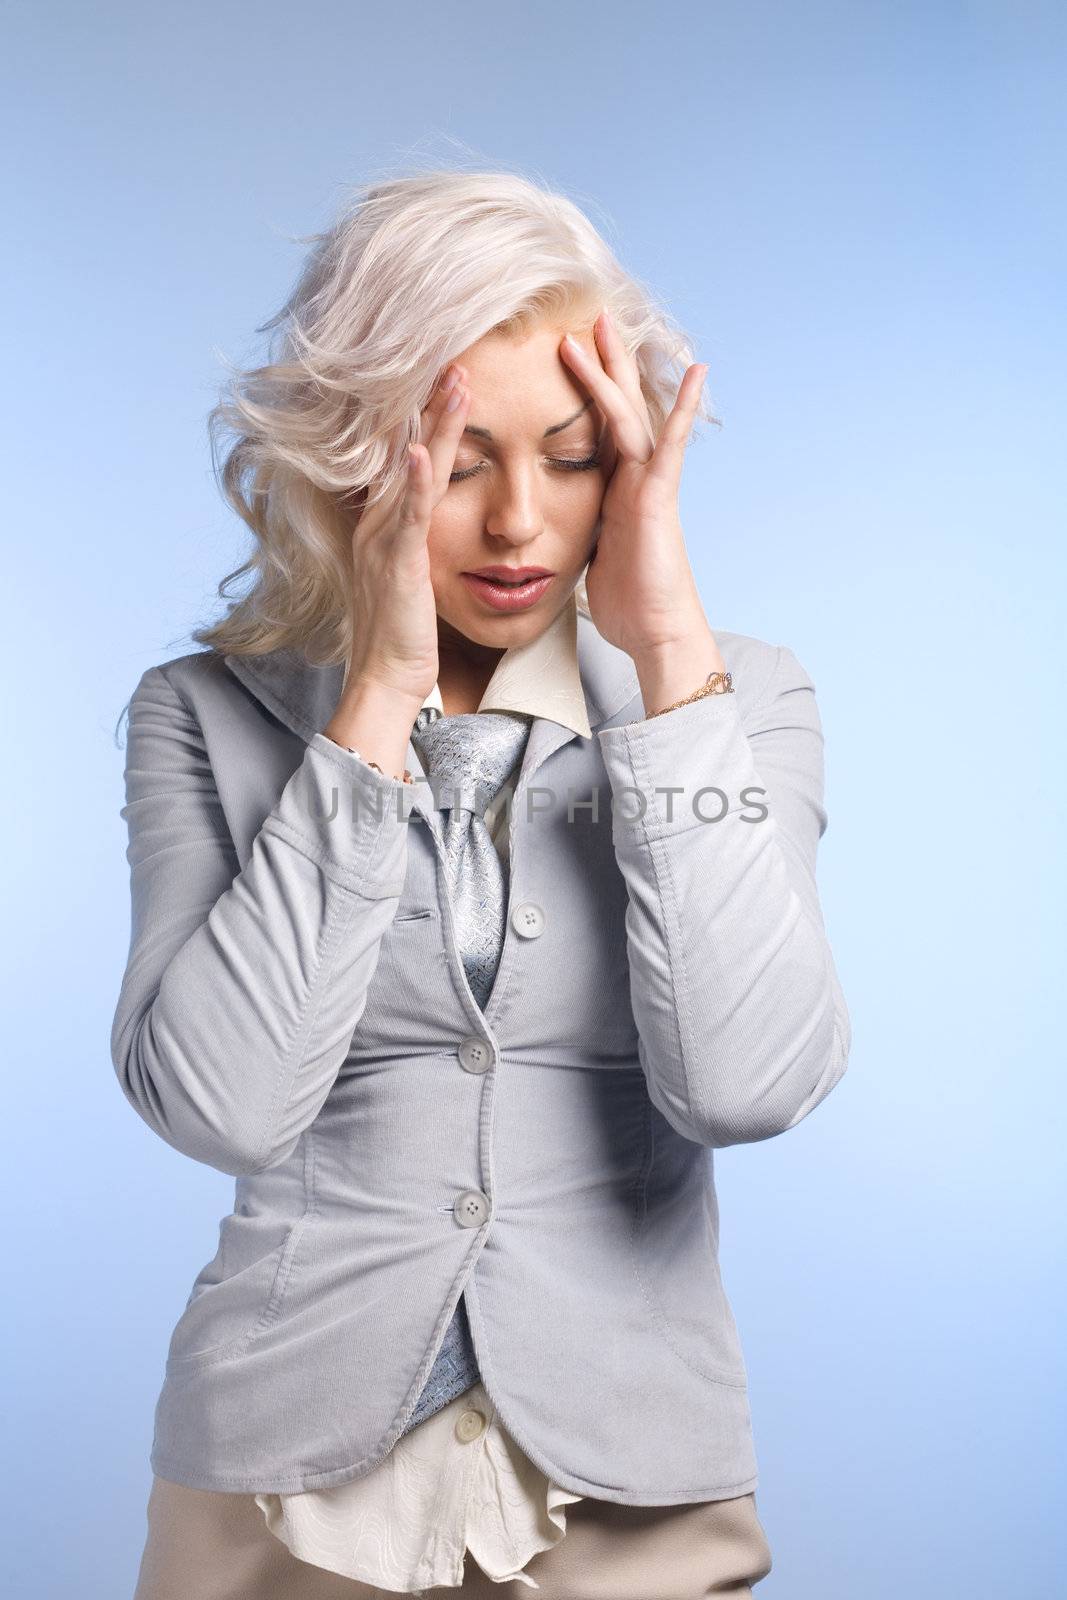 Beautyful blond woman with headache on blue background